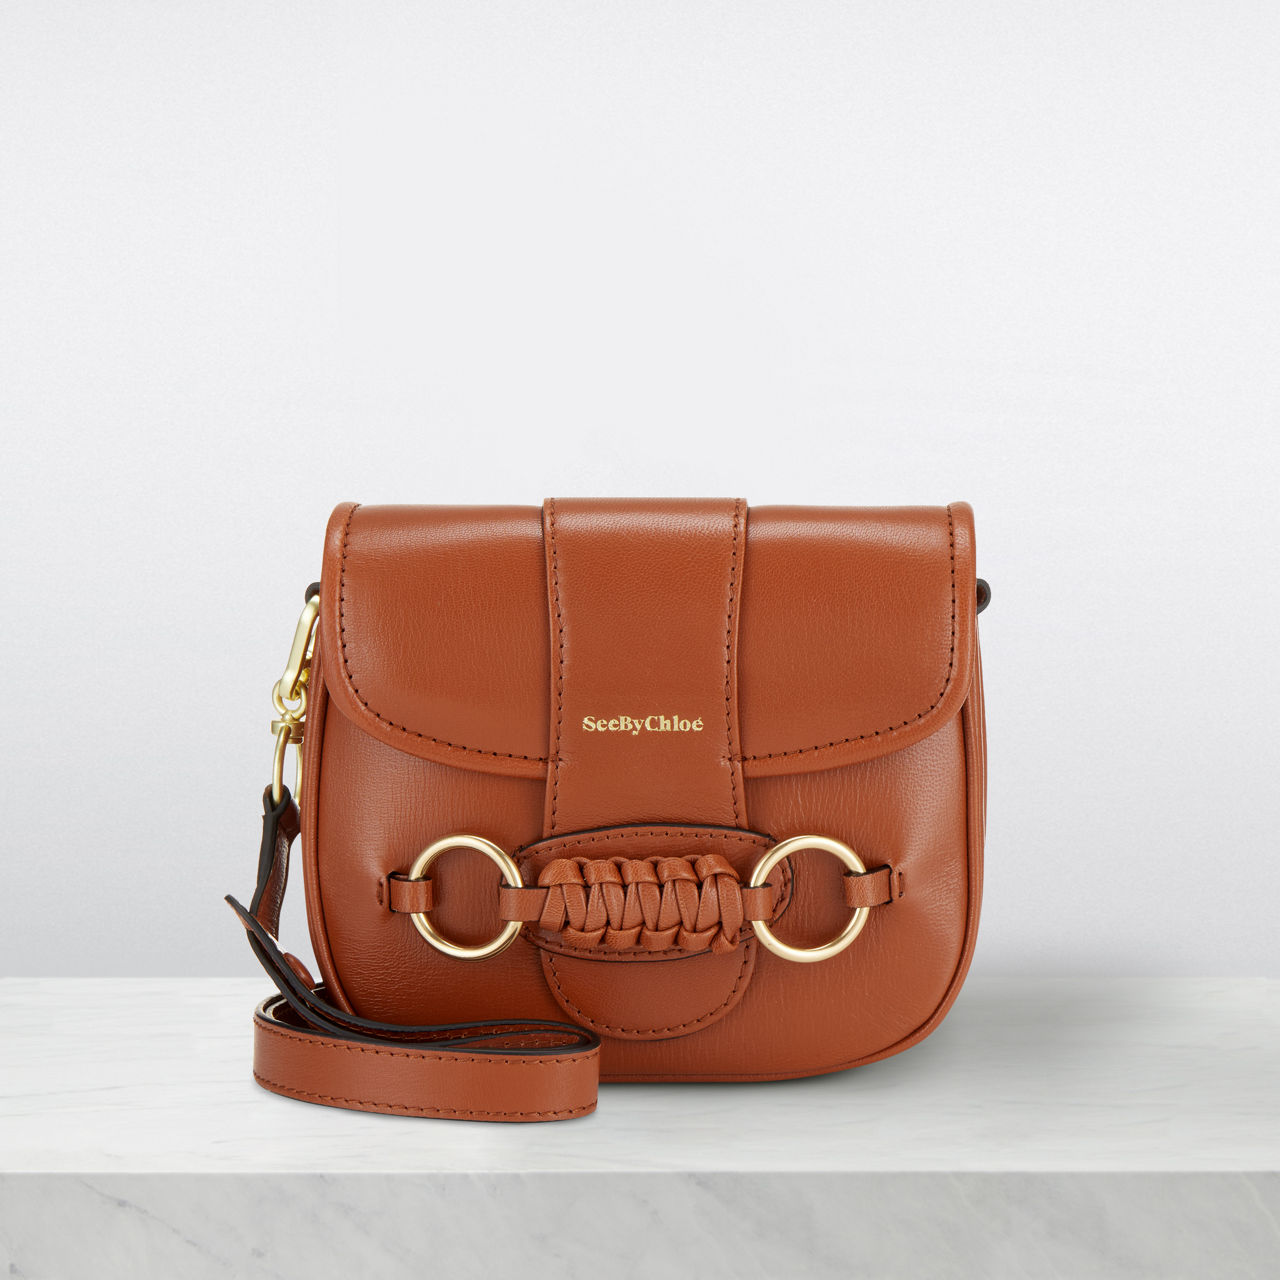 chanel patent leather flap handbag